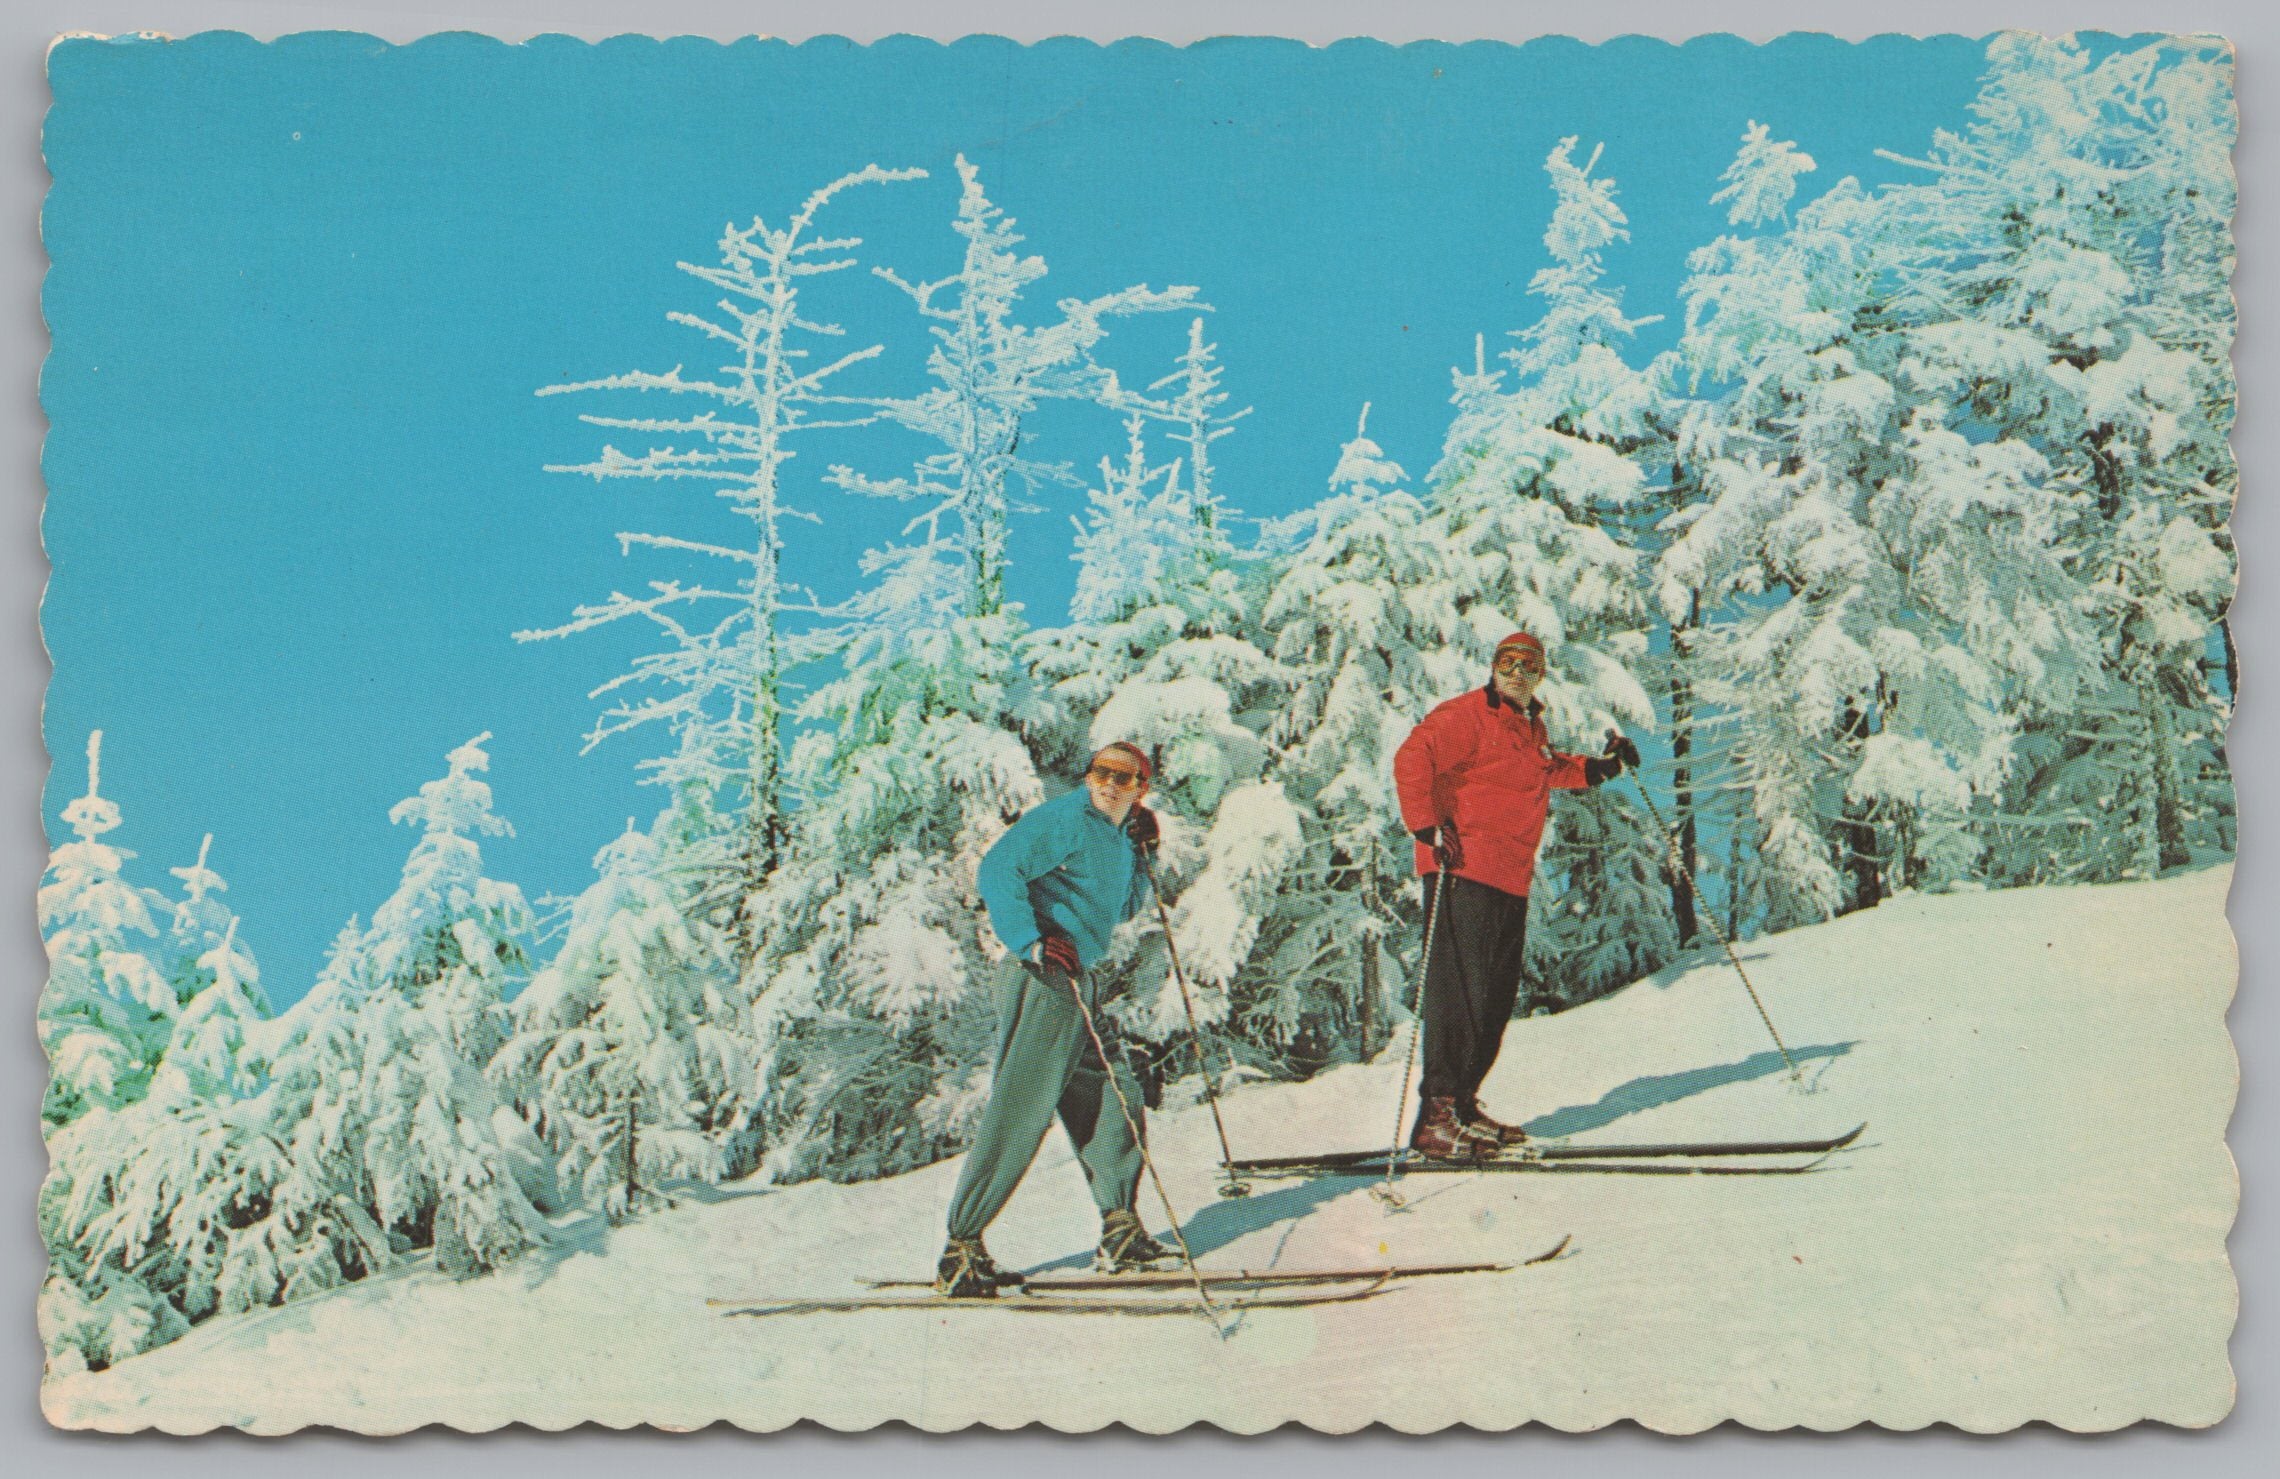 Reat Stop At Repos Au Sommet, Two People on Ski Slope, Vintage PC